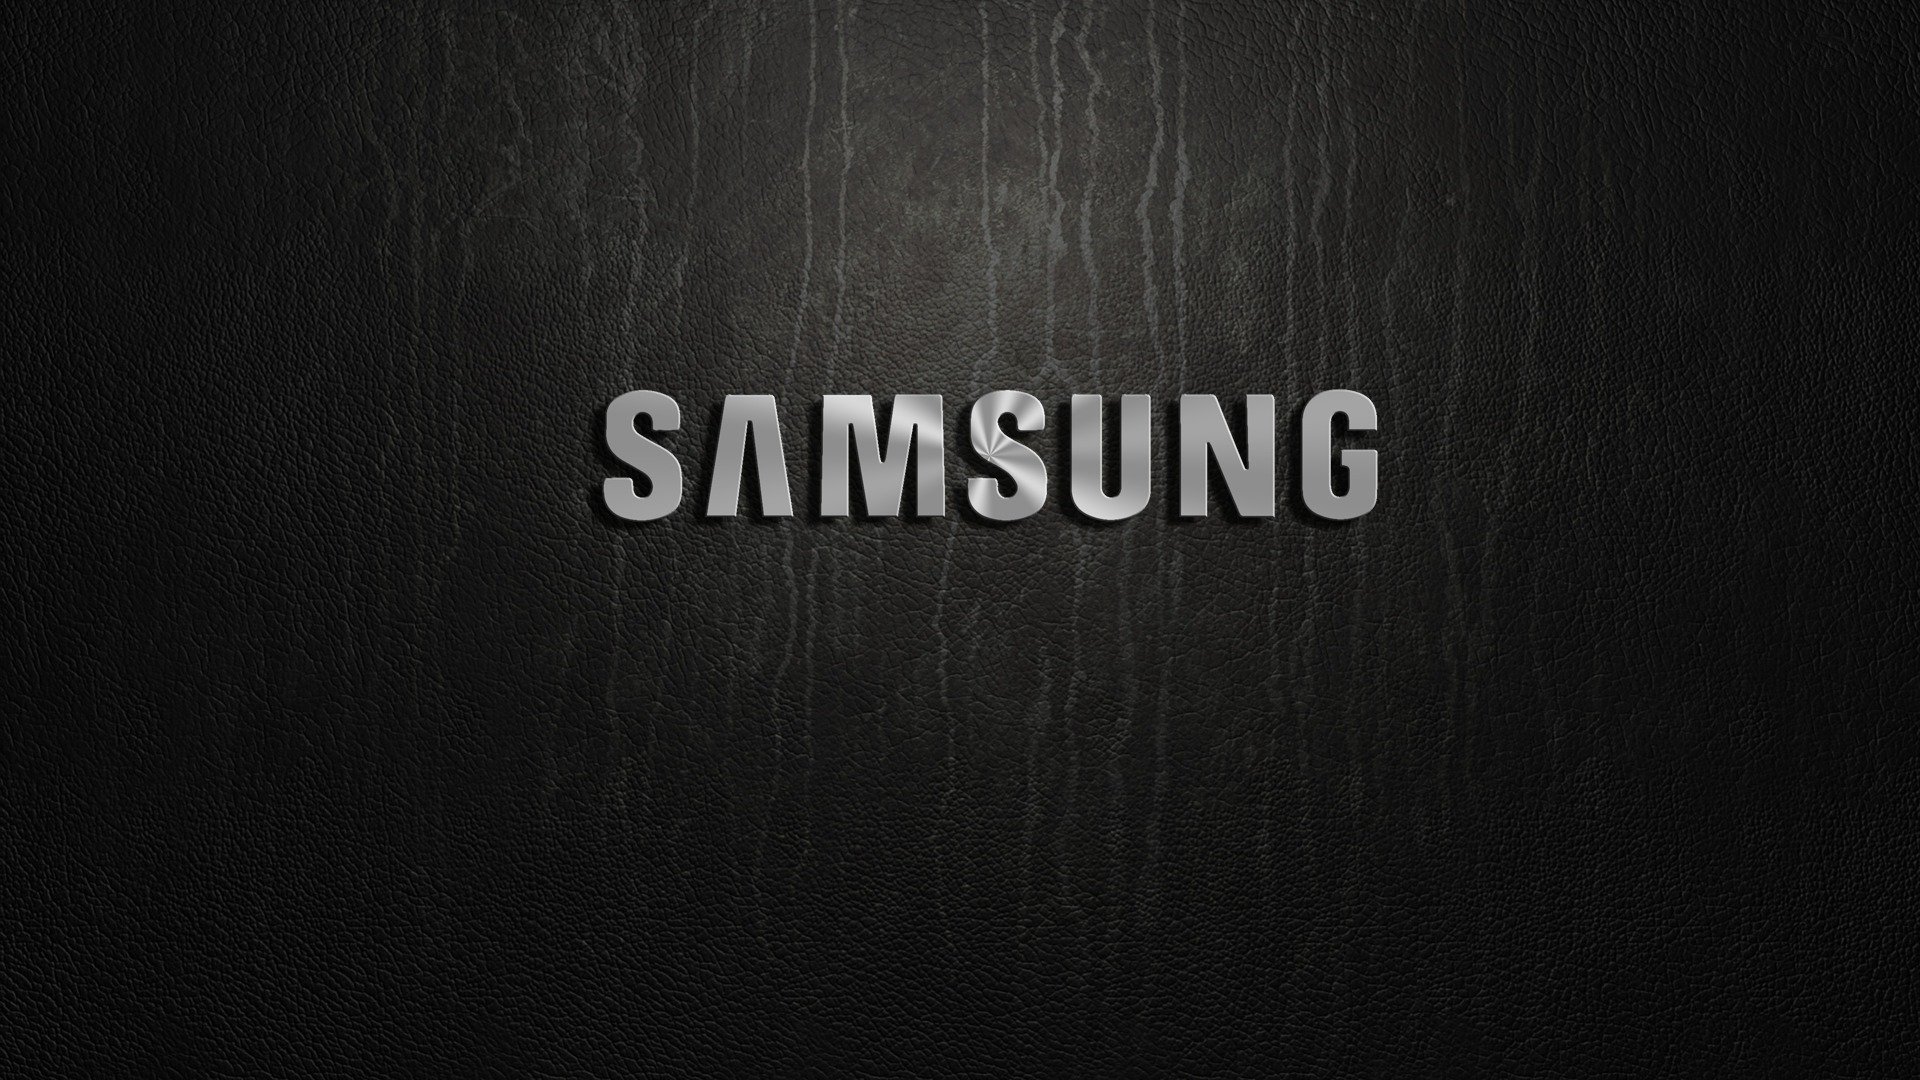 Обои на самсунг высокого качества. Самсунг логотип. Обои Samsung. Заставка самсунг. Обои на рабочий стол самсунг.